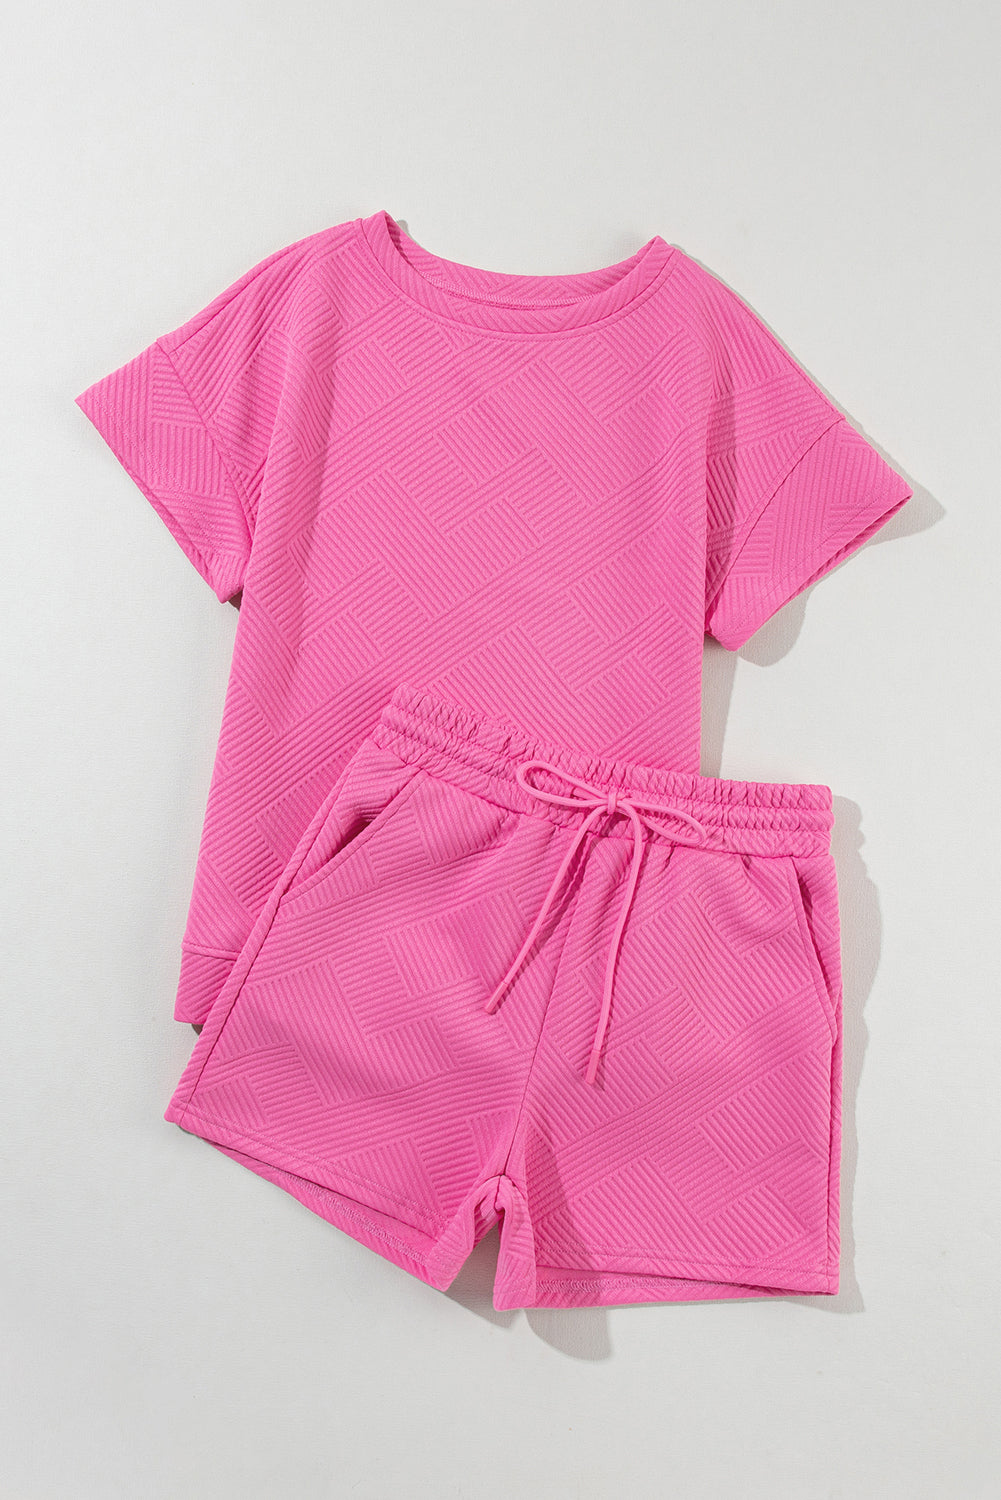 Pink Top and Shorts Set